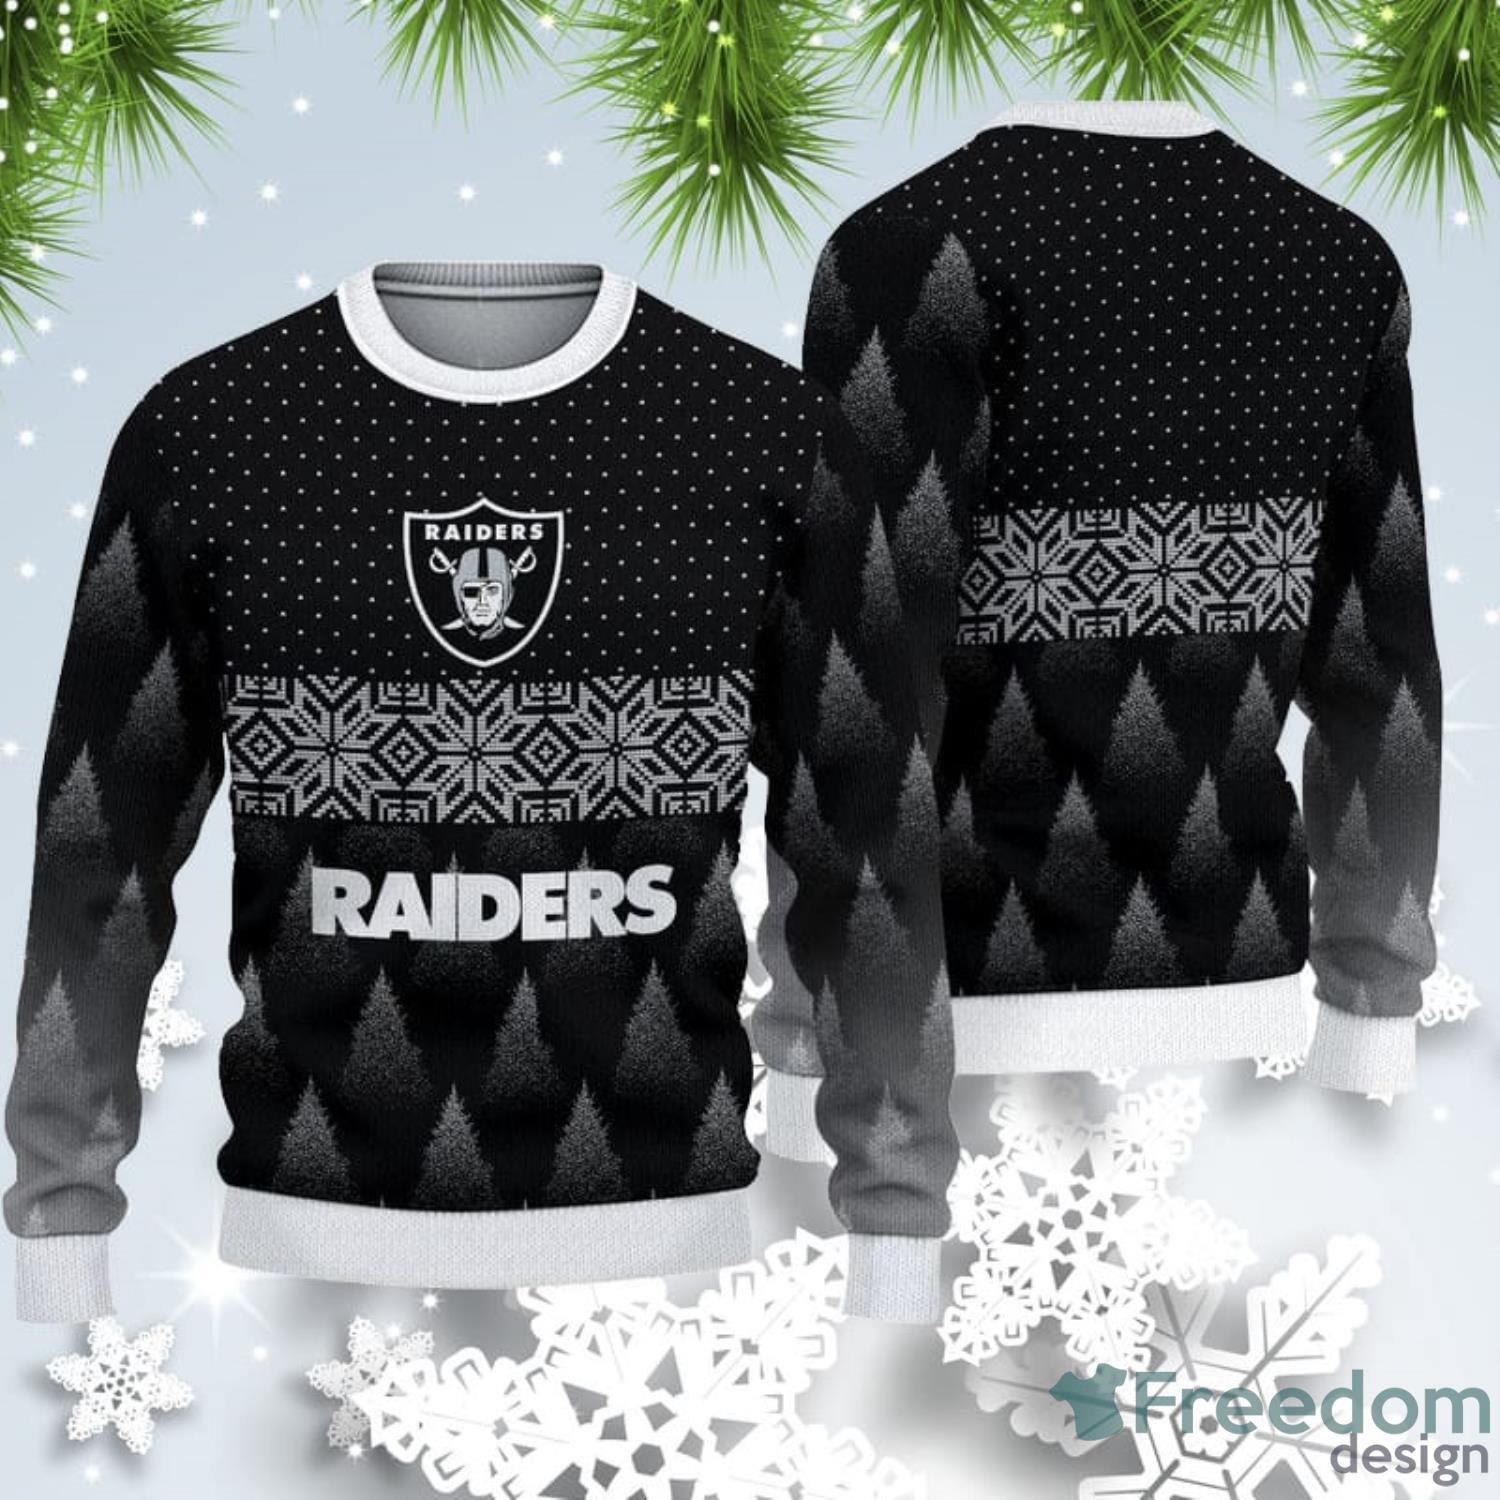 raiders sweater with christmas lights